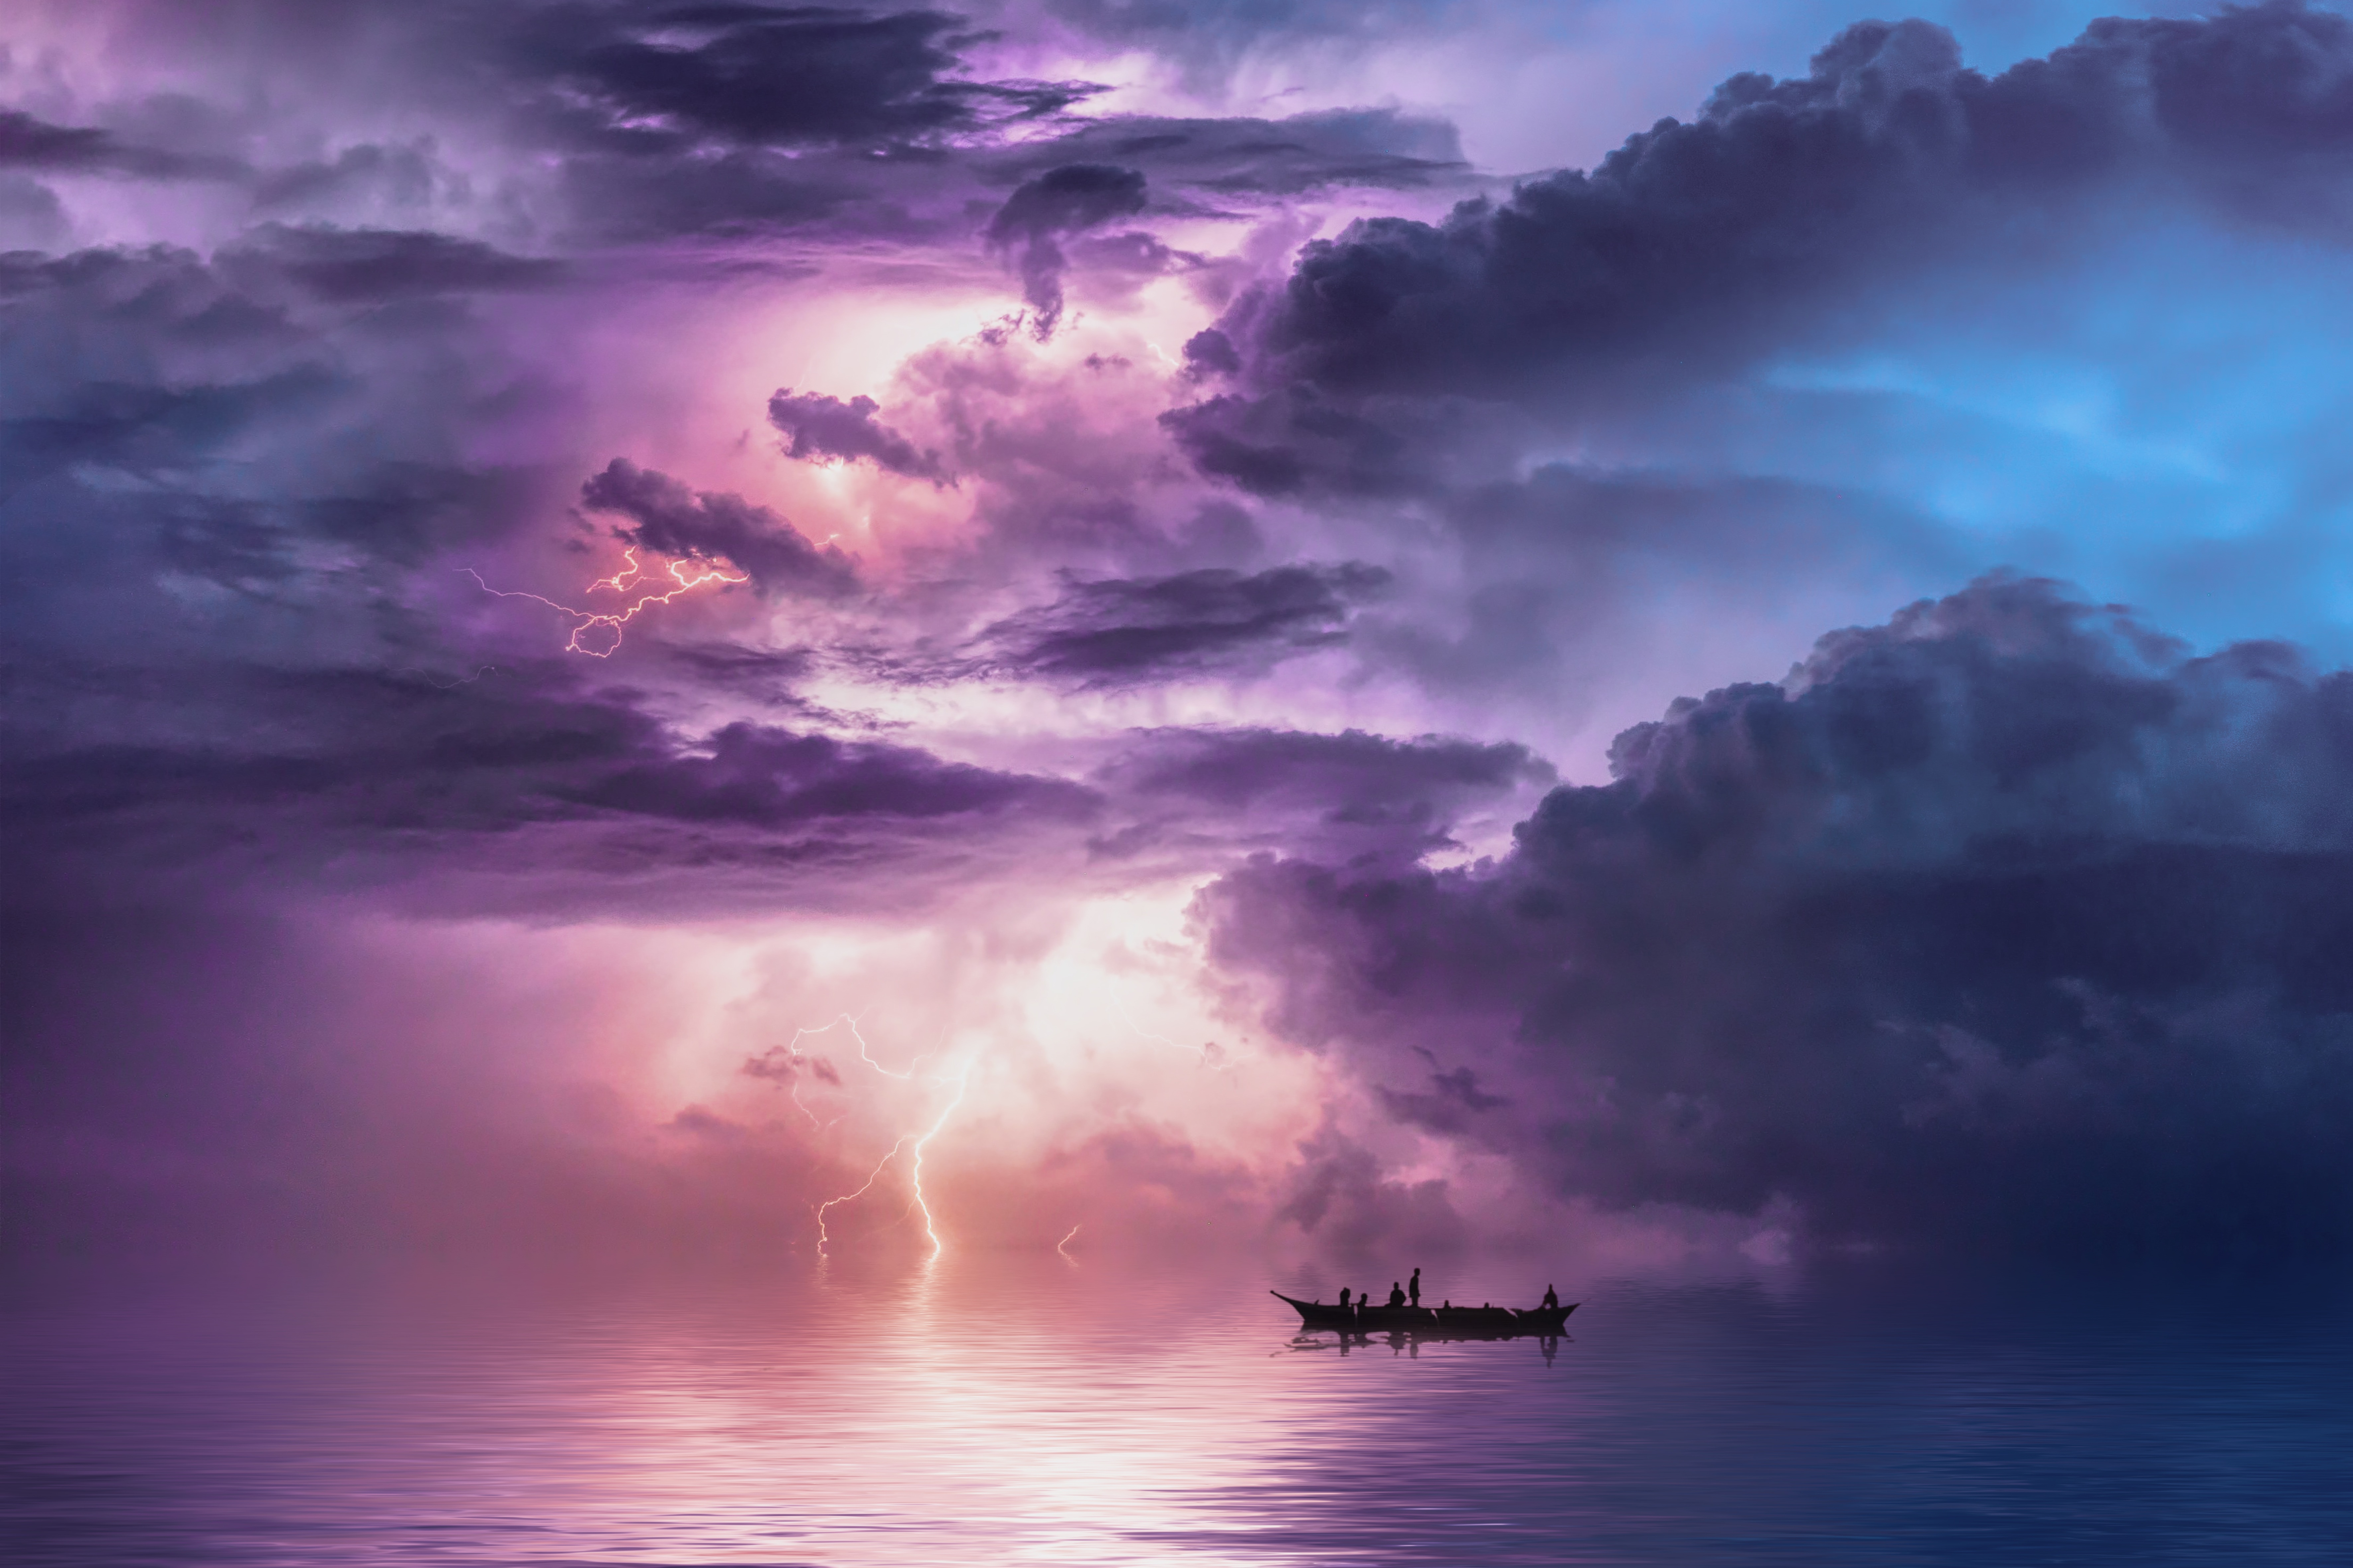 HD wallpaper, Surreal, 5K, 8K, Thunderstorm, Ocean, Clouds, Boat, Storm